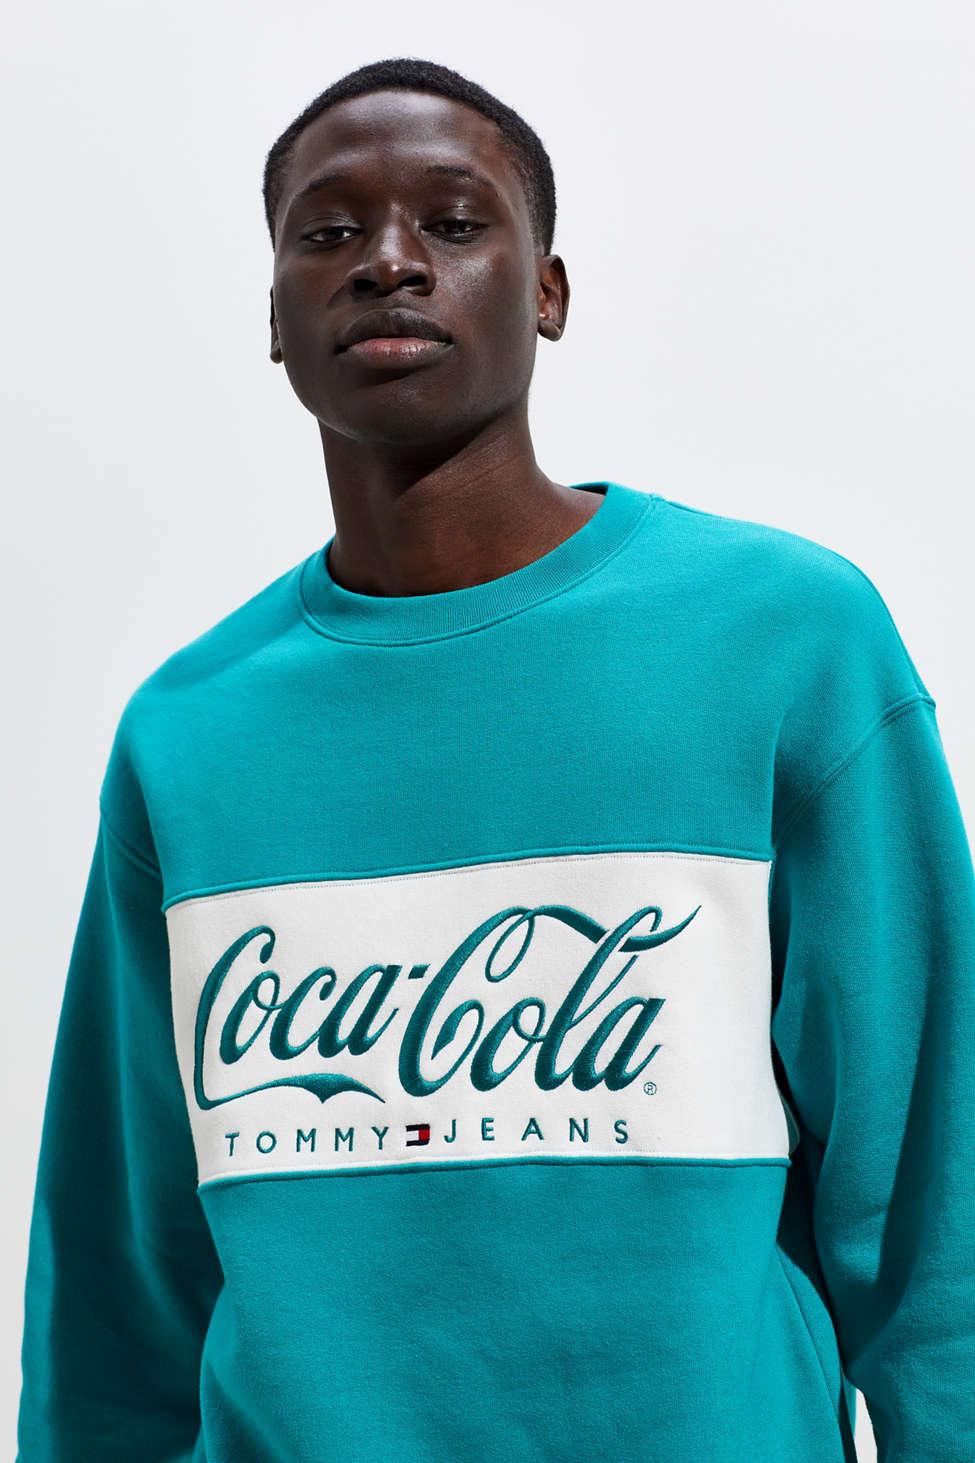 Coca Cola Tommy Jeans Sweatshirt Shop, 51% OFF | www.ipecal.edu.mx